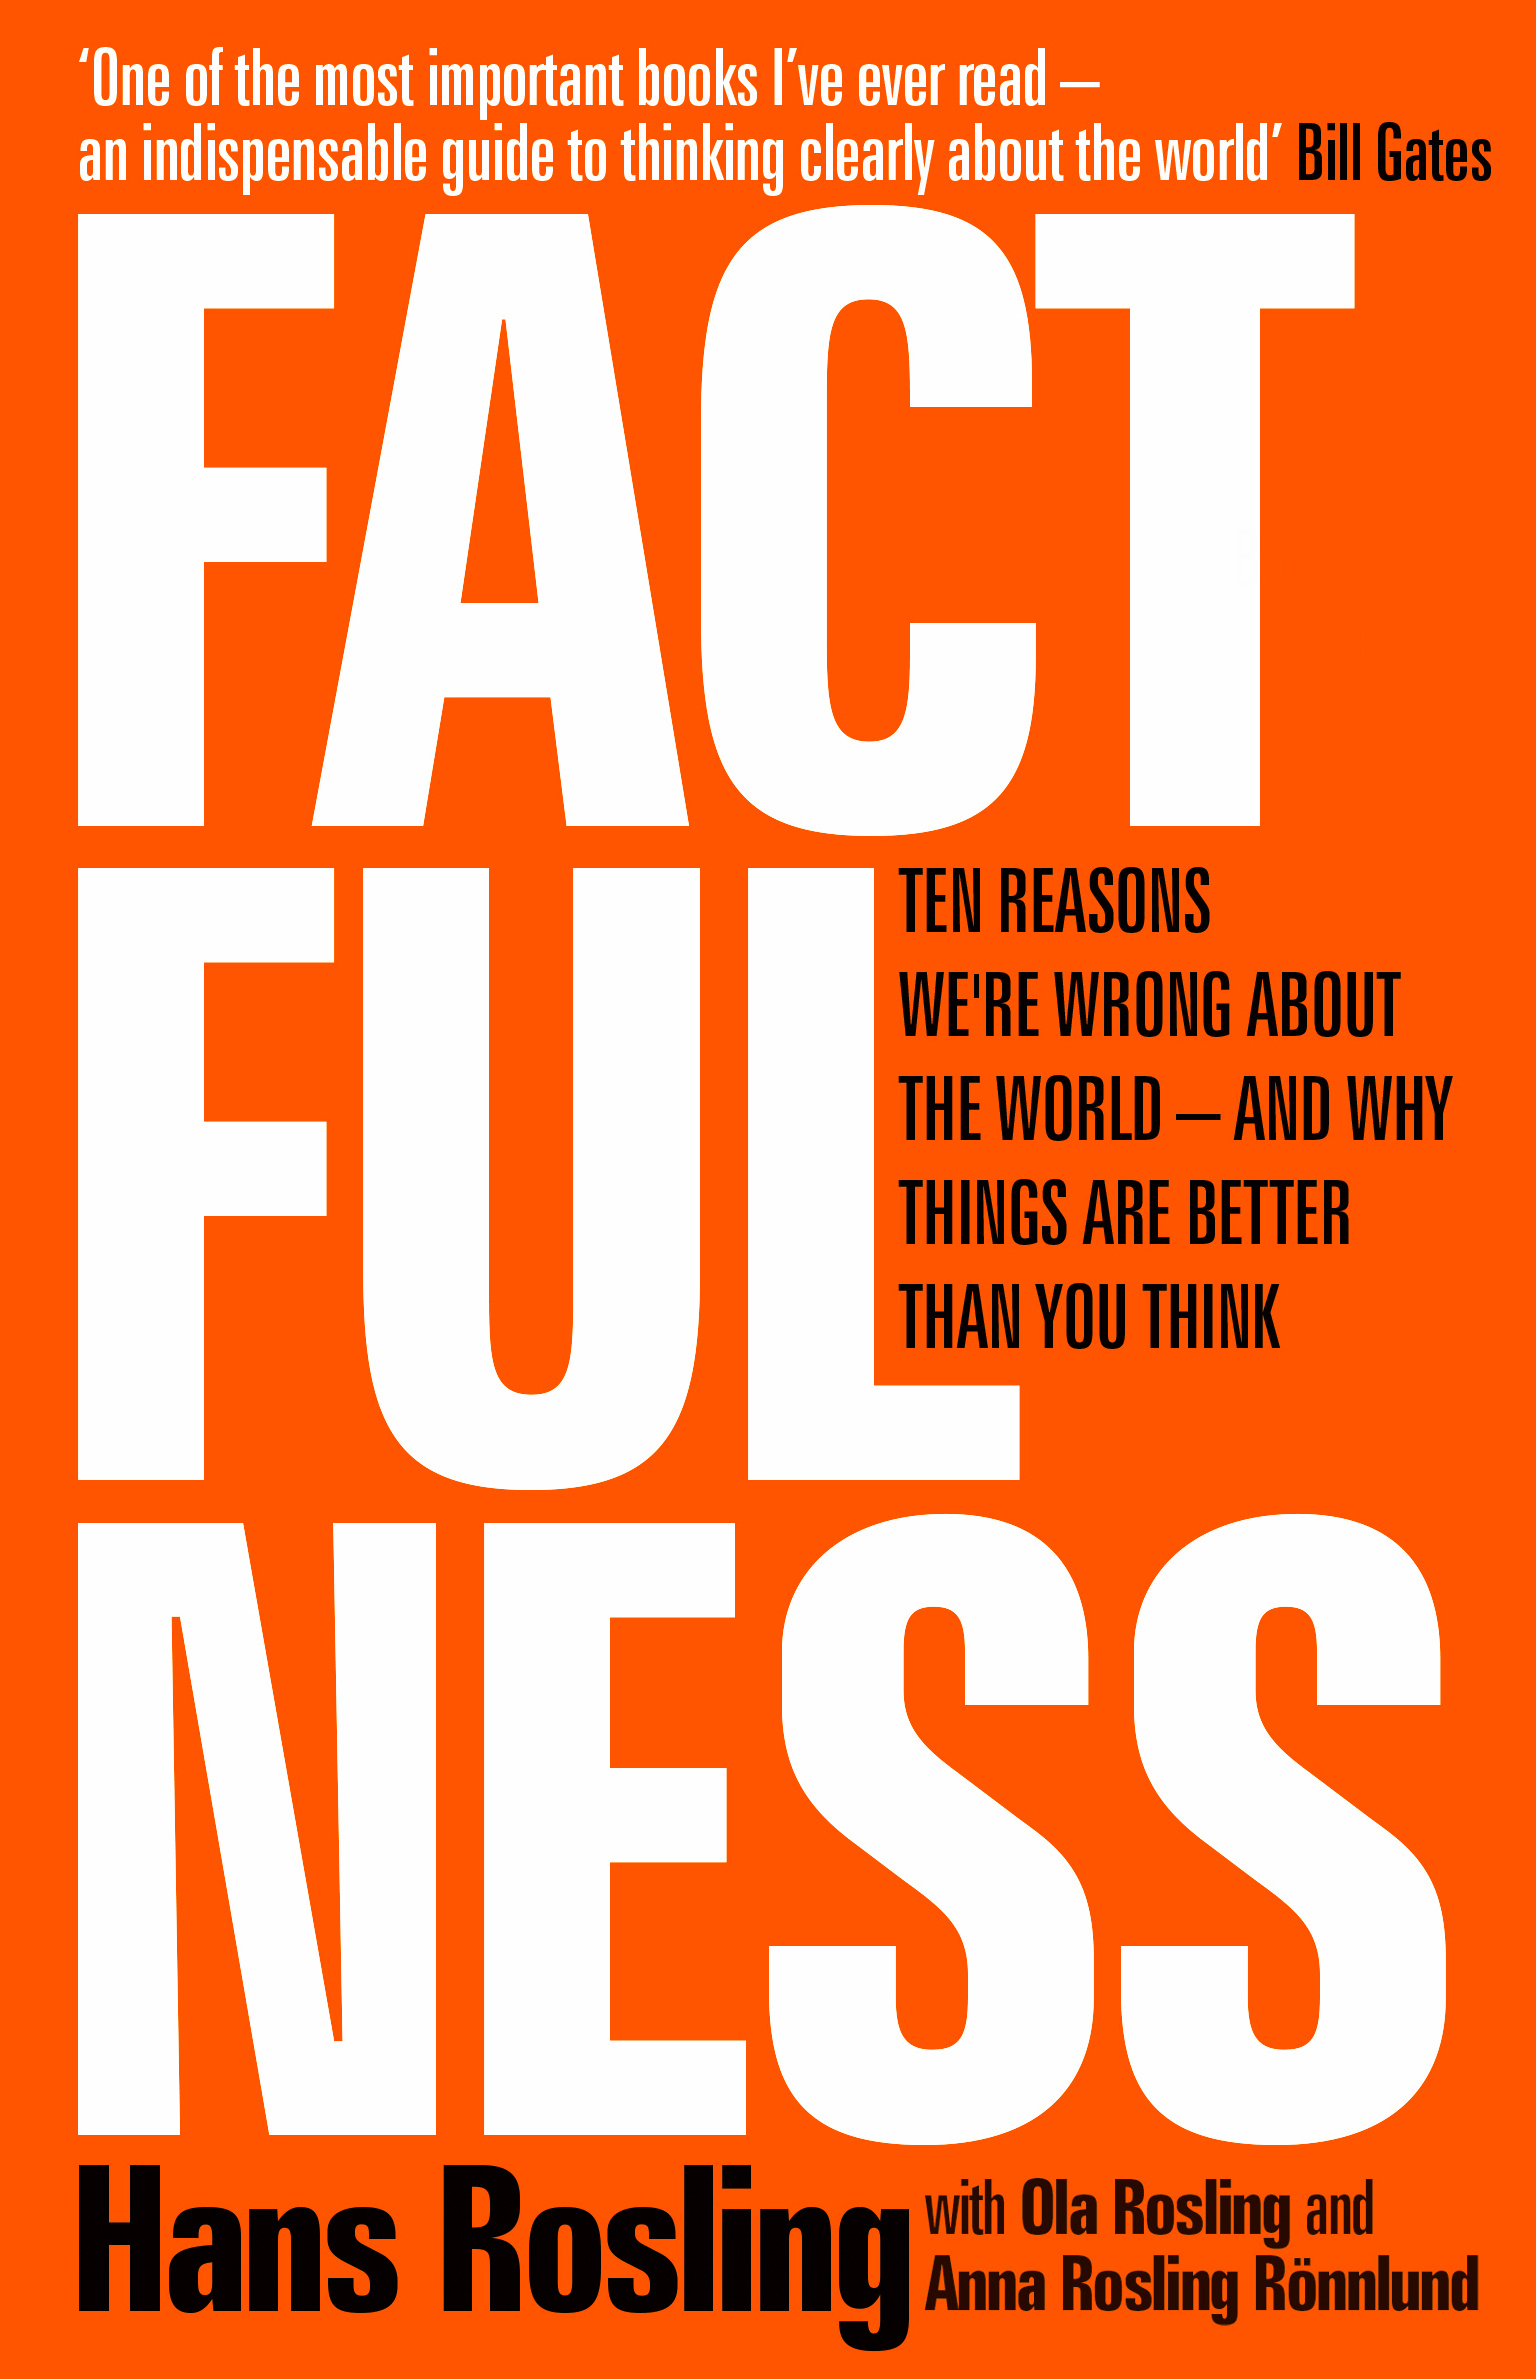 FactfulnessOla Rosling